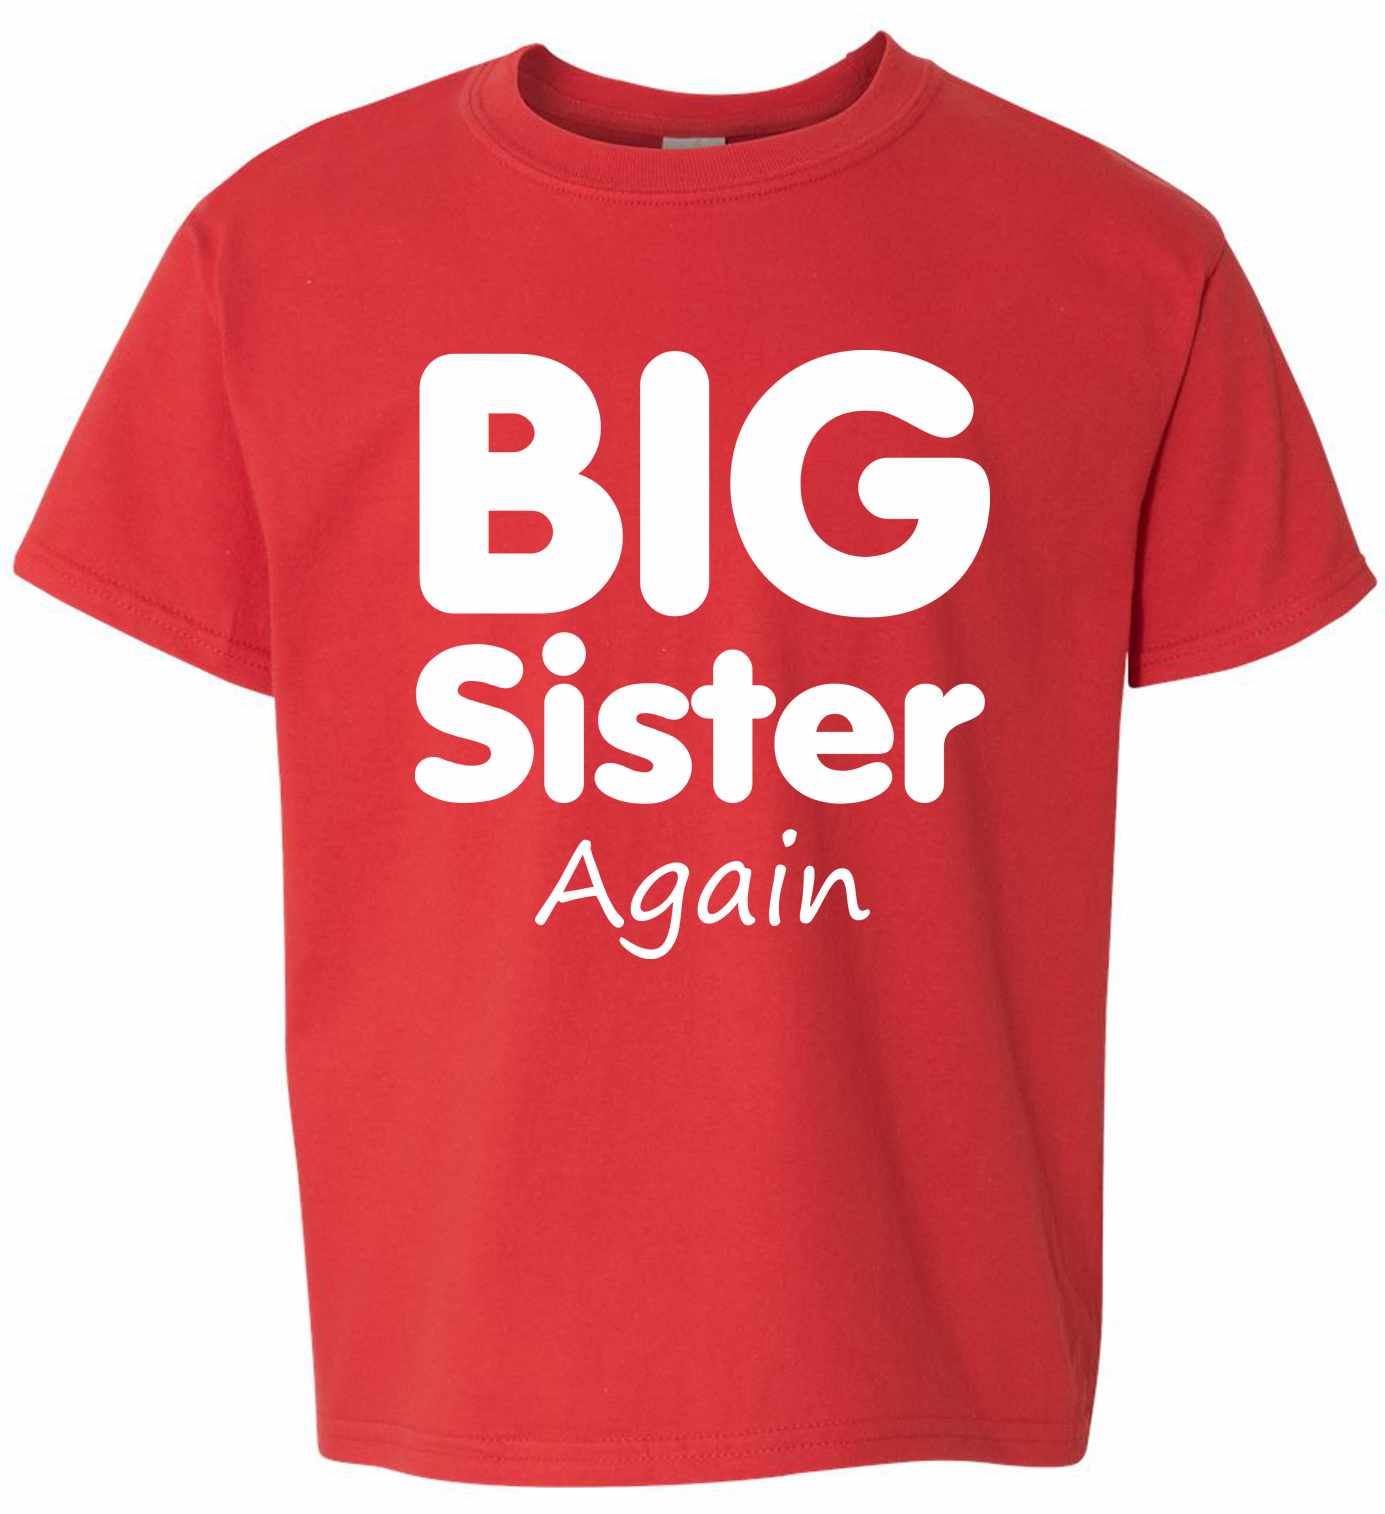 Big Sister Again Youth T-Shirt (#859-201)